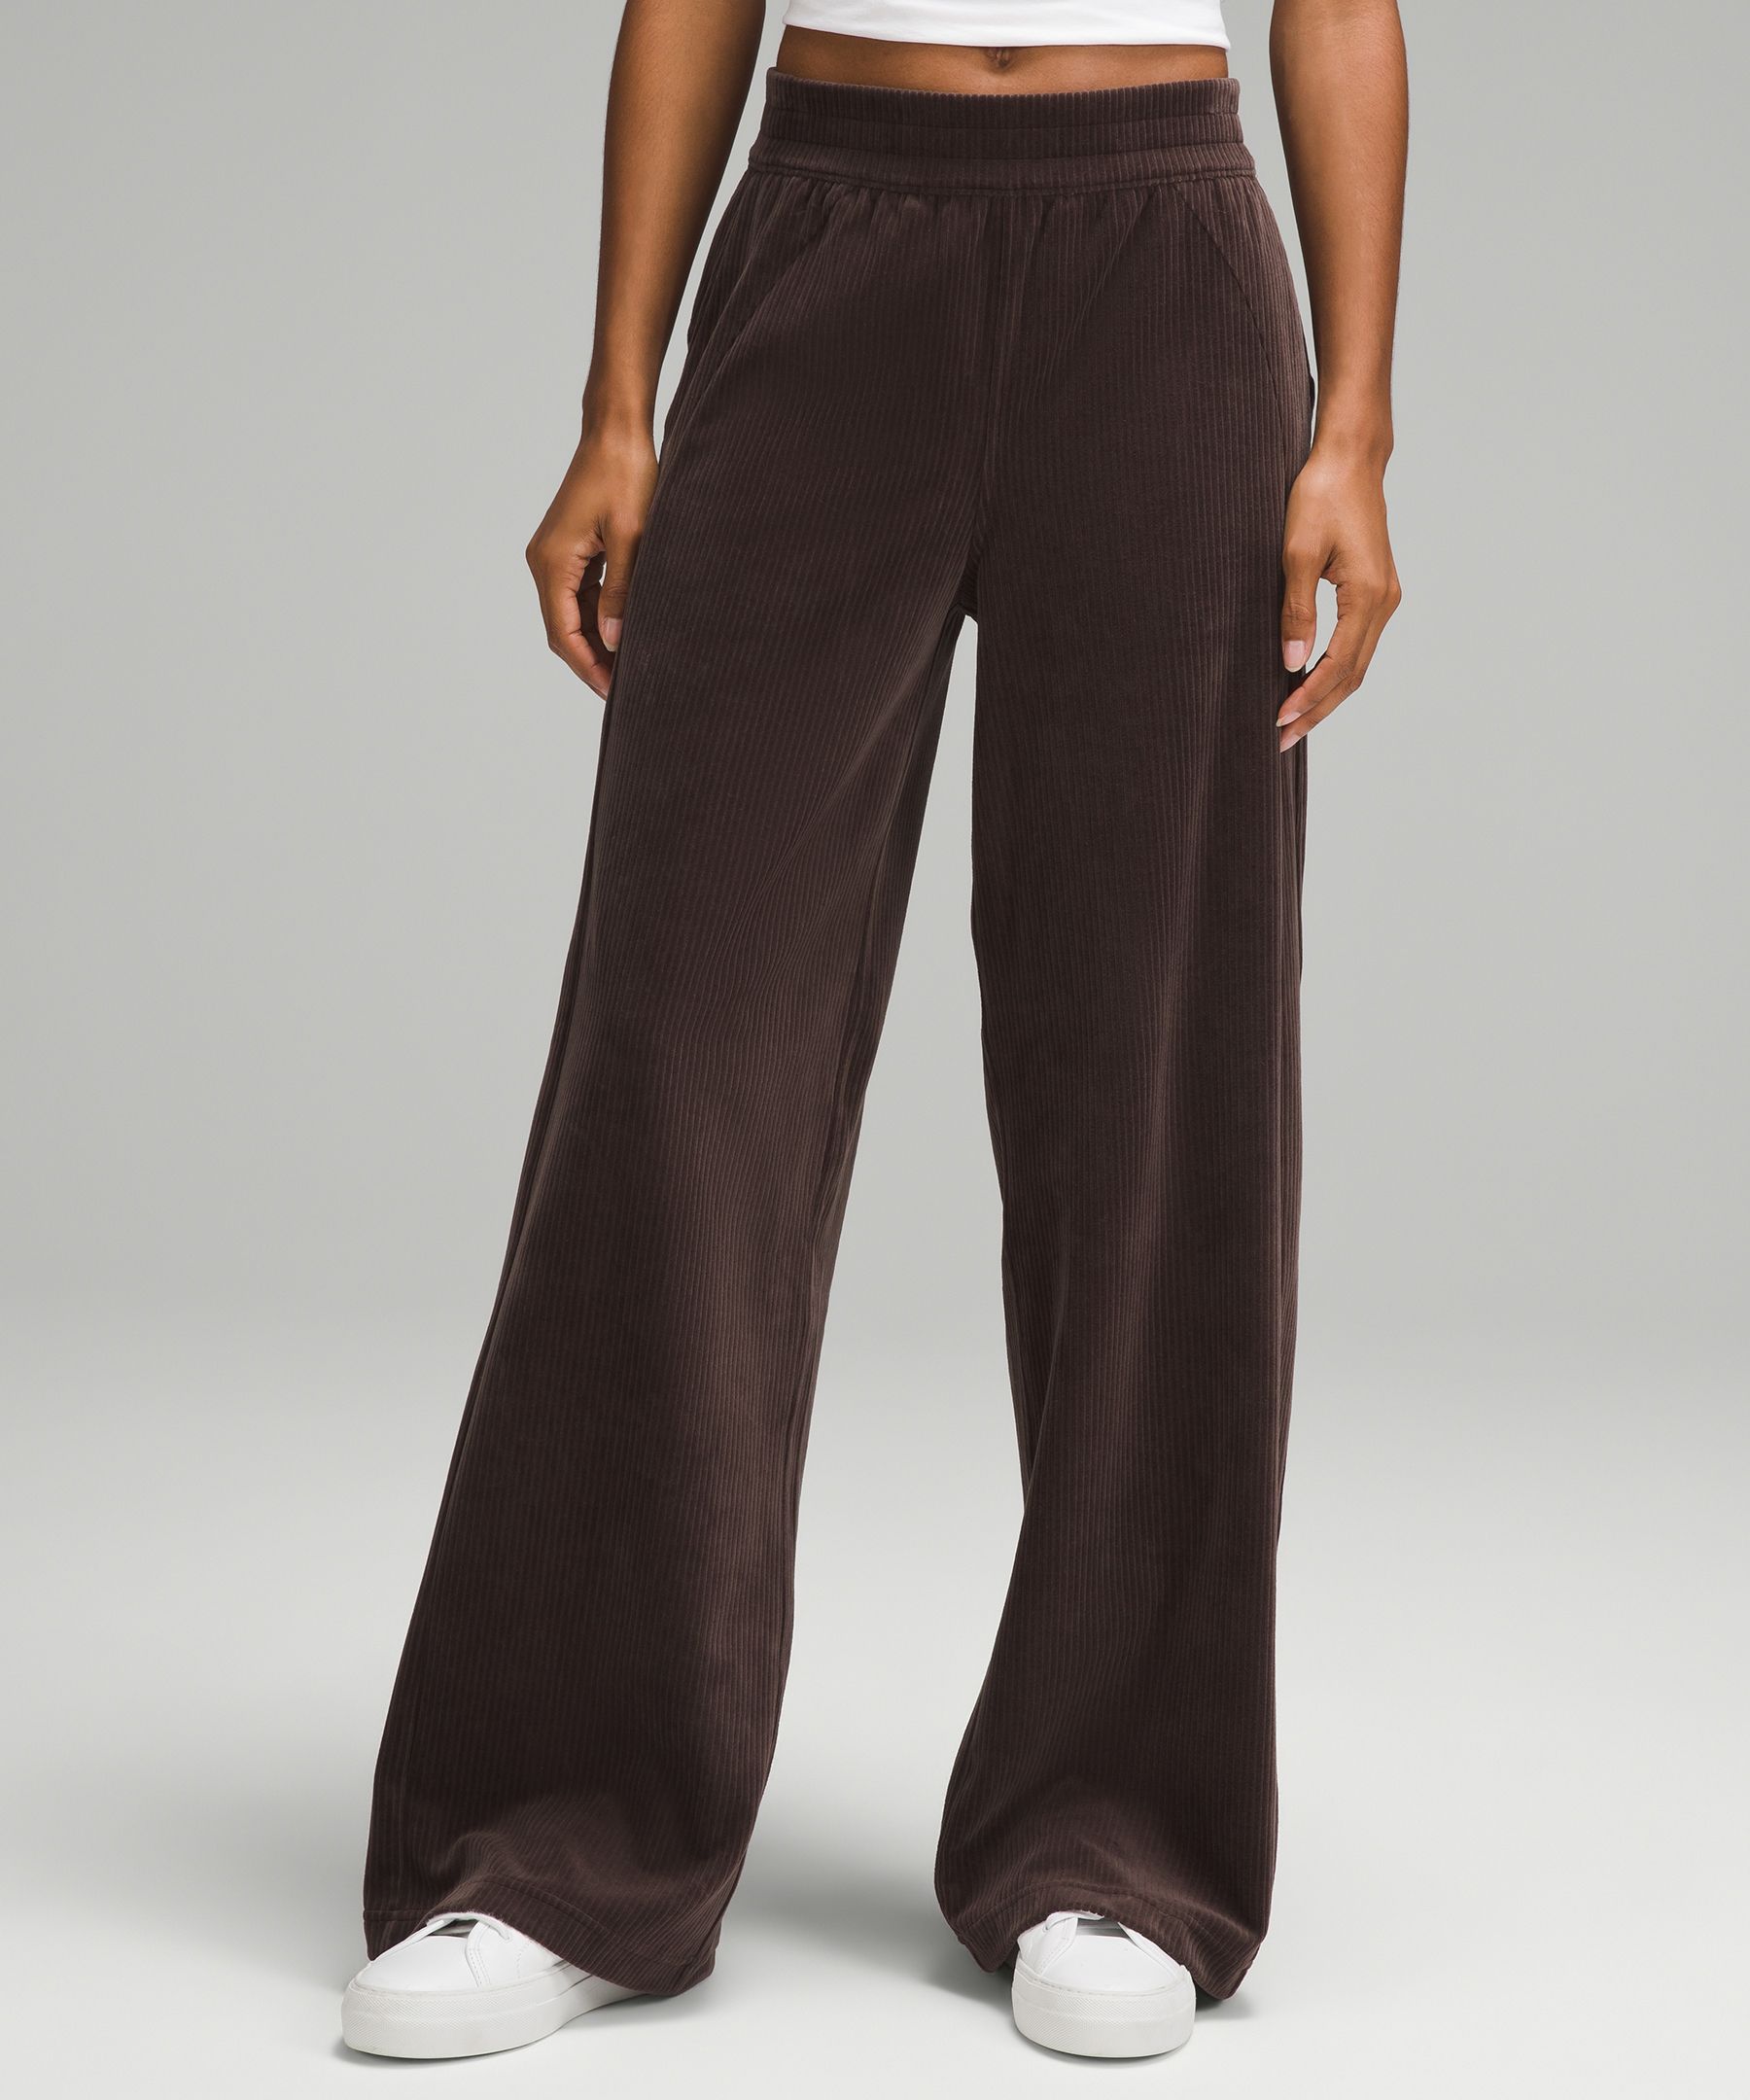 Lululemon Align Wide Leg Pants Brown Size 4 - $40 (59% Off Retail